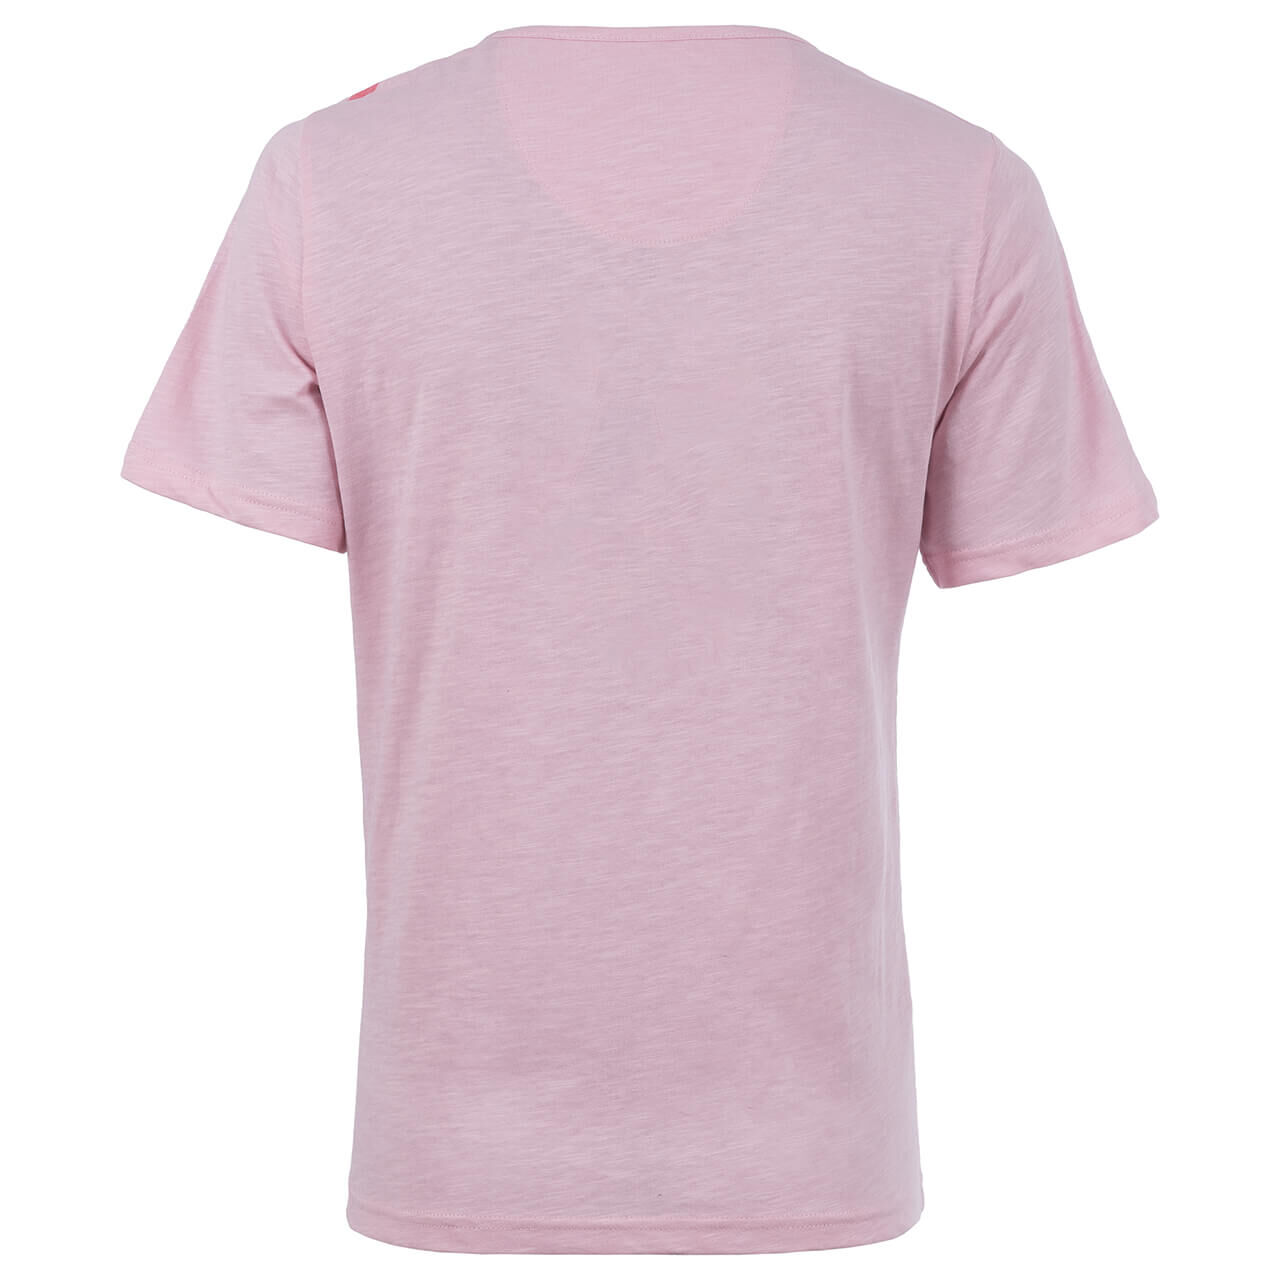 Soquesto Damen T-Shirt rose cloud print